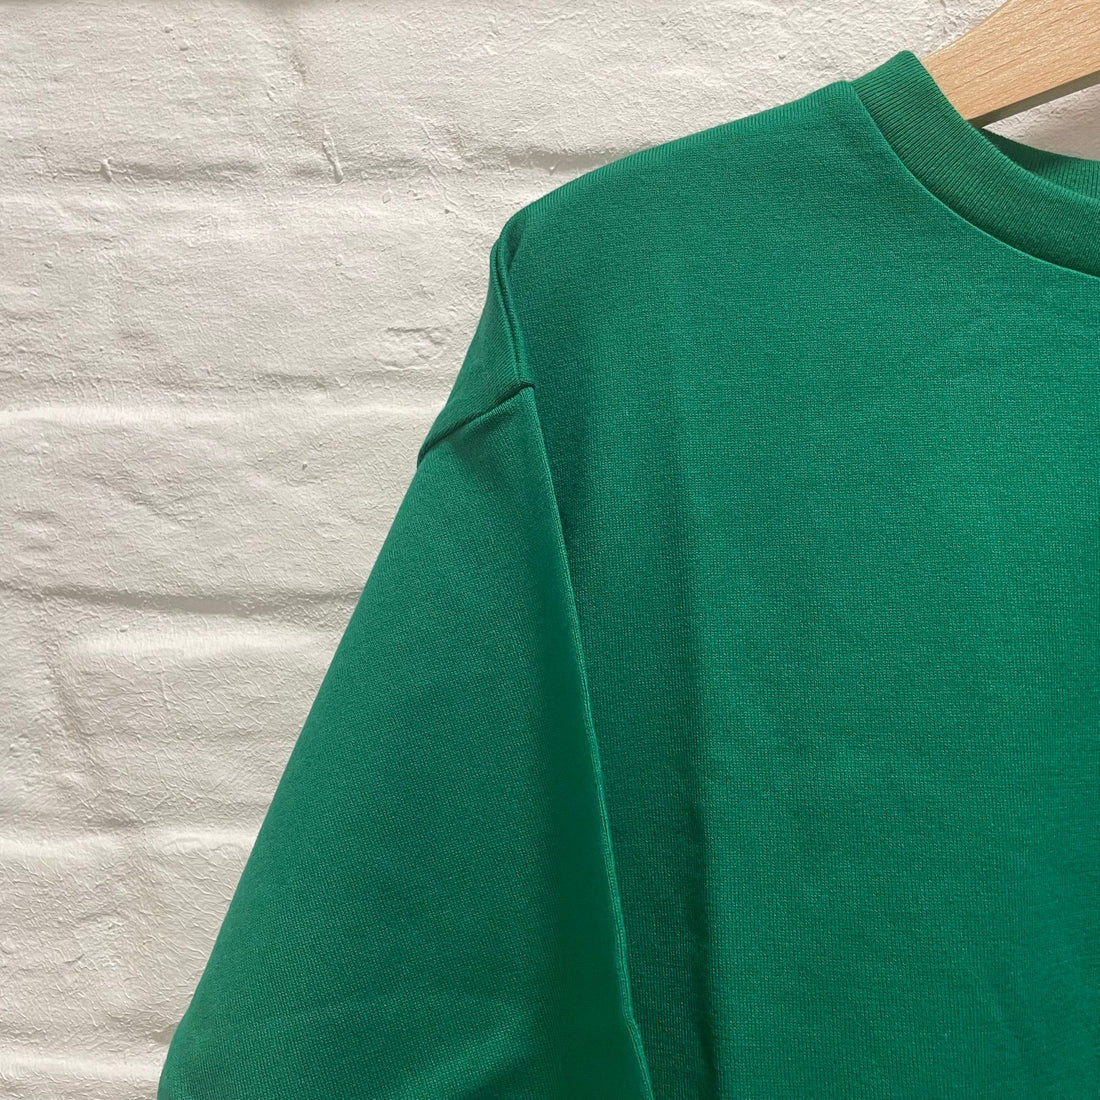 East End Highlanders - longsleeve t-shirt - green